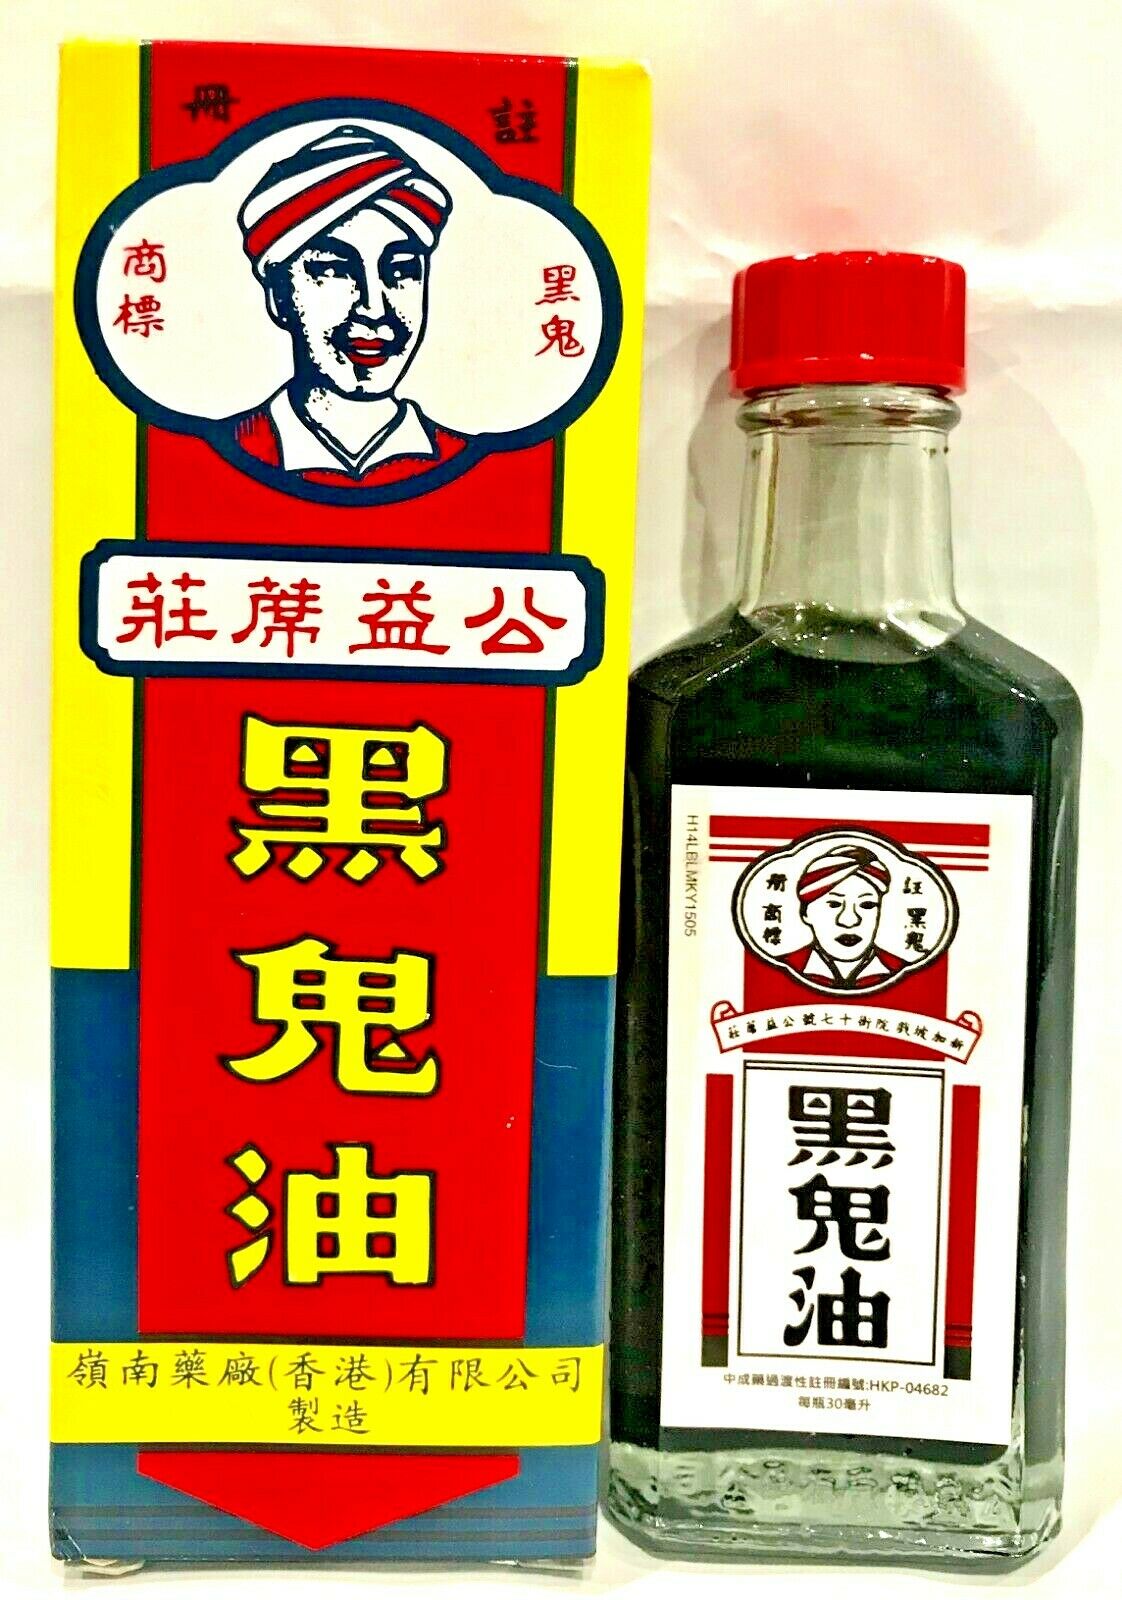 Hak Kwai (Black Ghost) Pain Relieving Lotion - 1 Fl. Oz. (30 Ml)  - 3 bottles